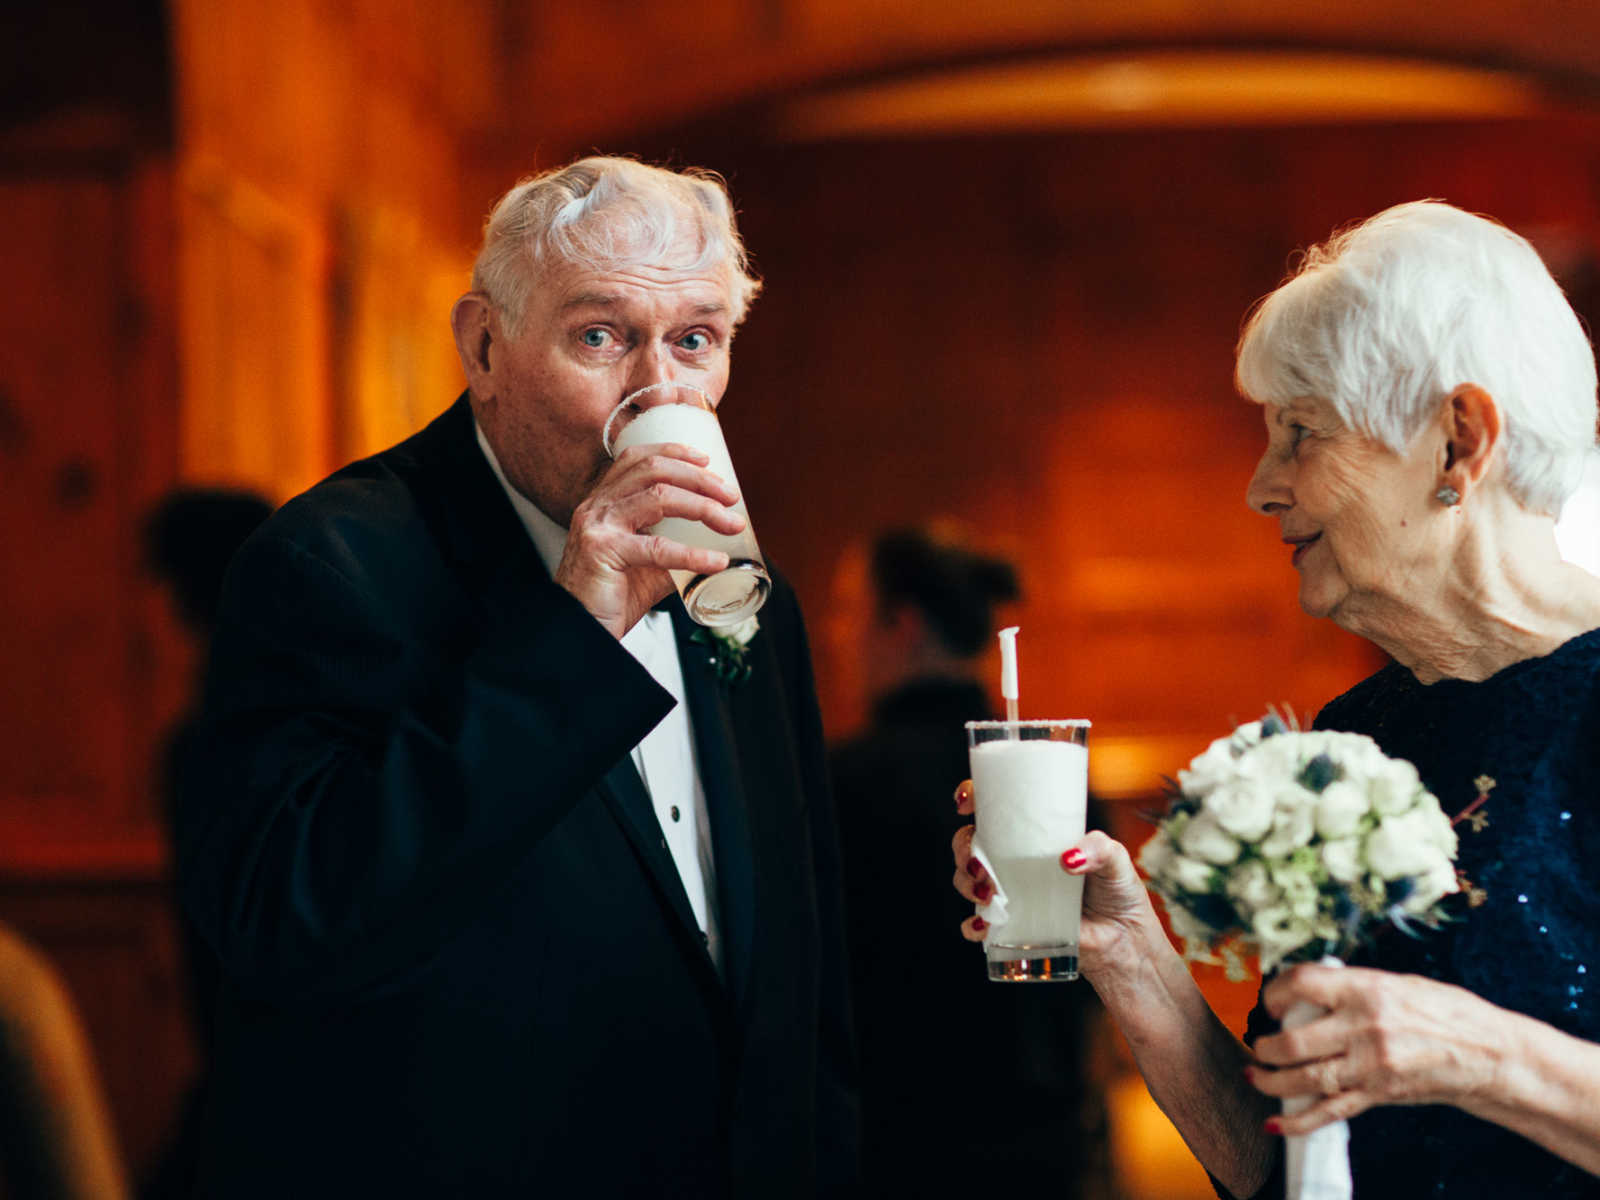 Elderly bride and groom drink frozen margaritas at wedding reception